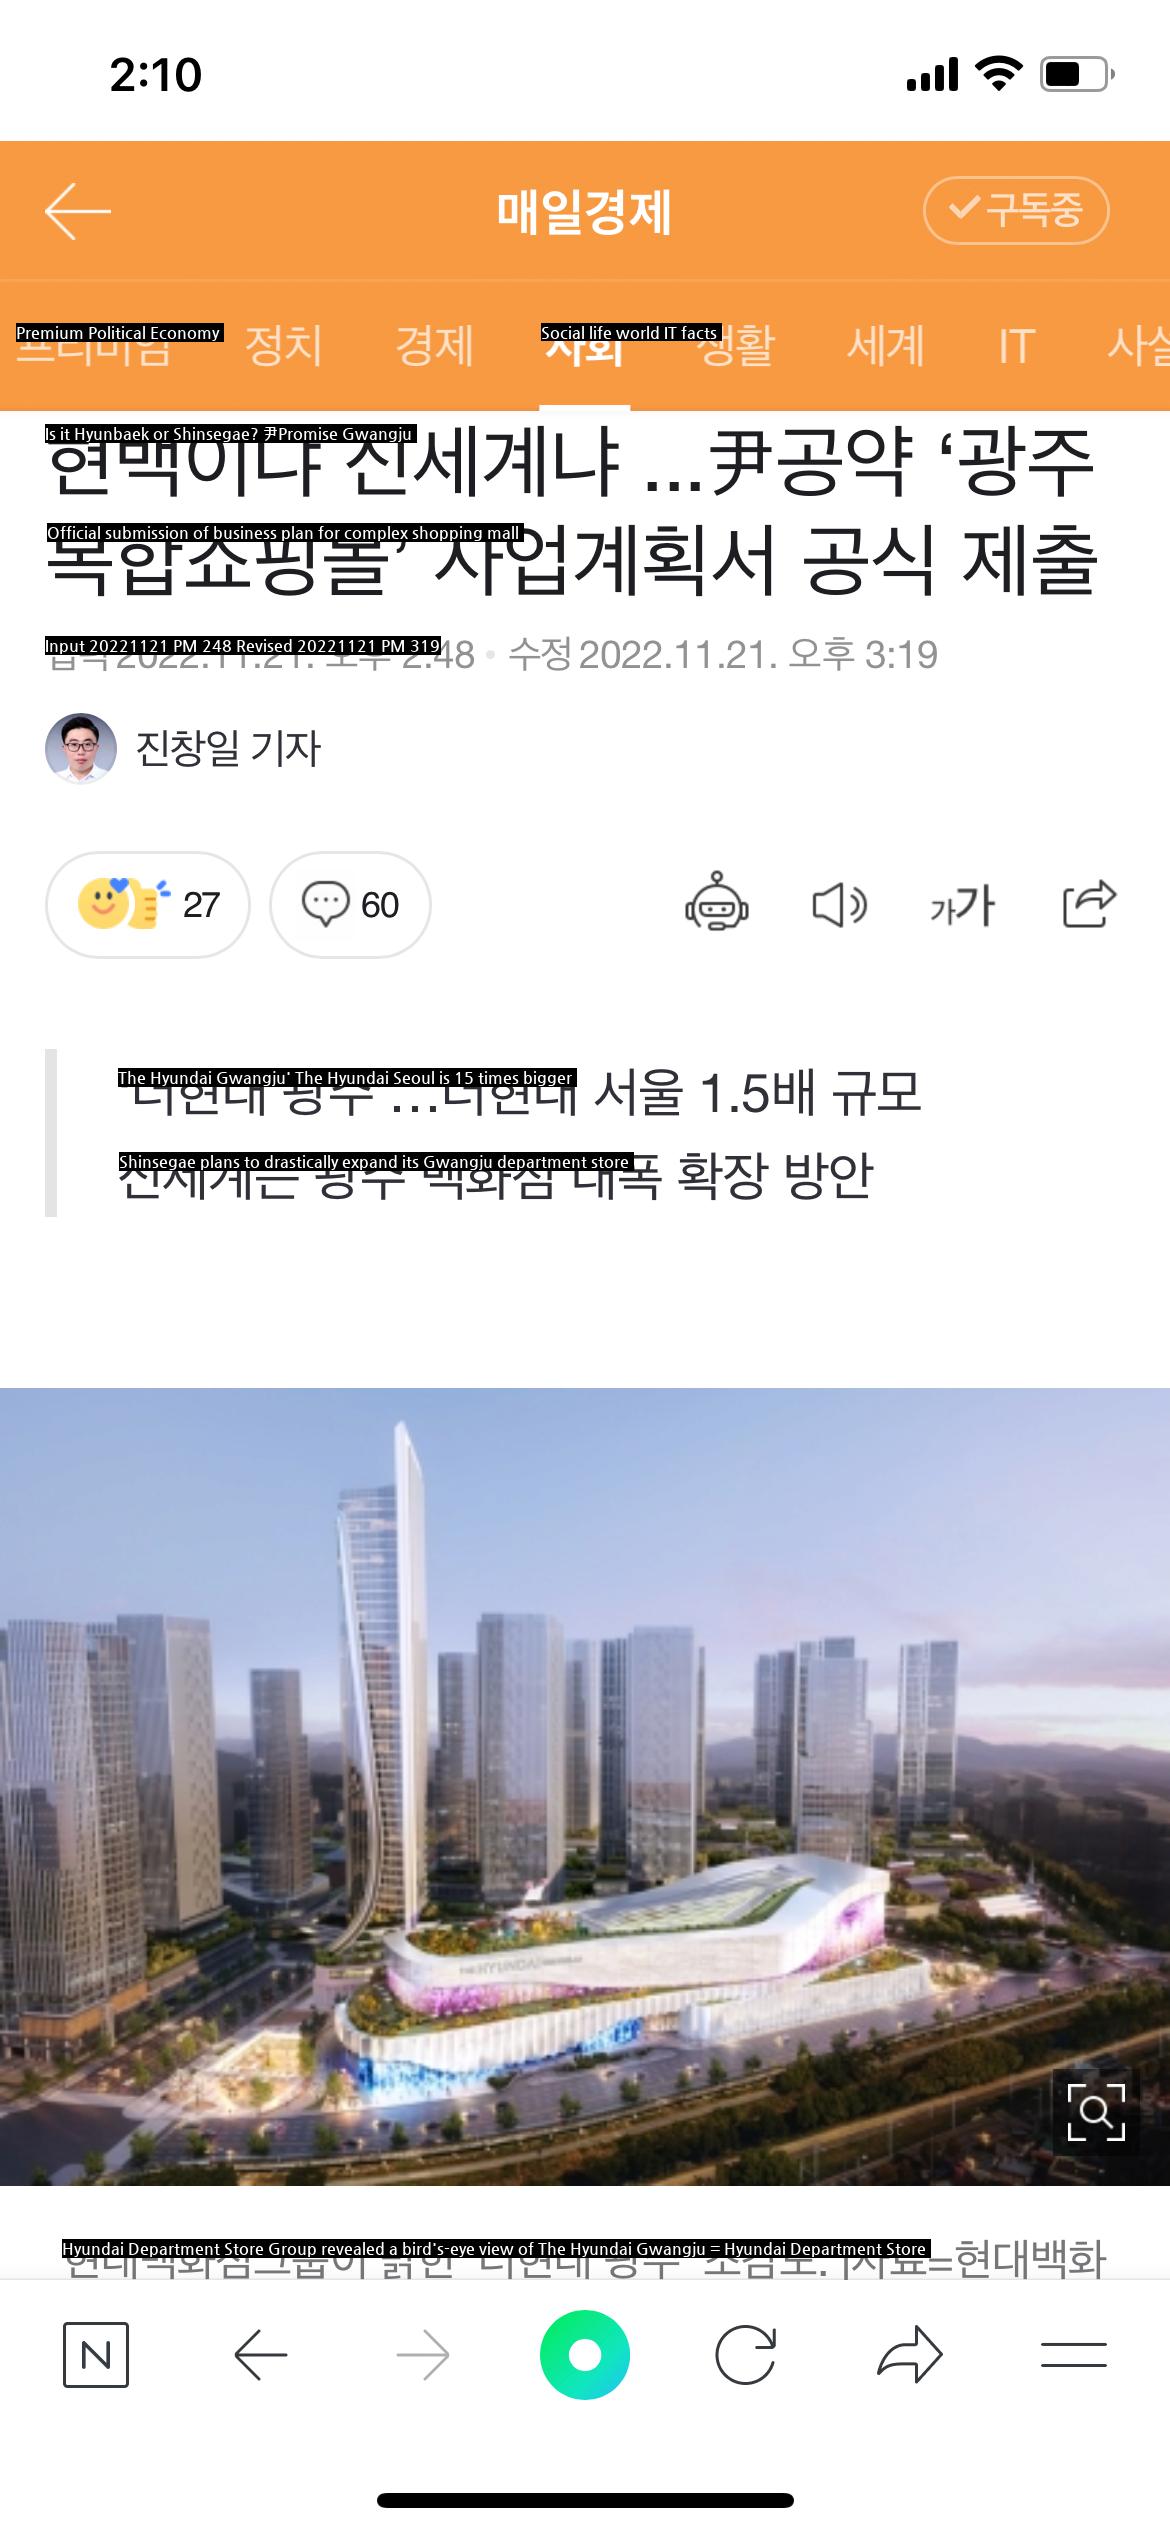 The final bird's eye view of "The Hyundai" in Gwangju is out